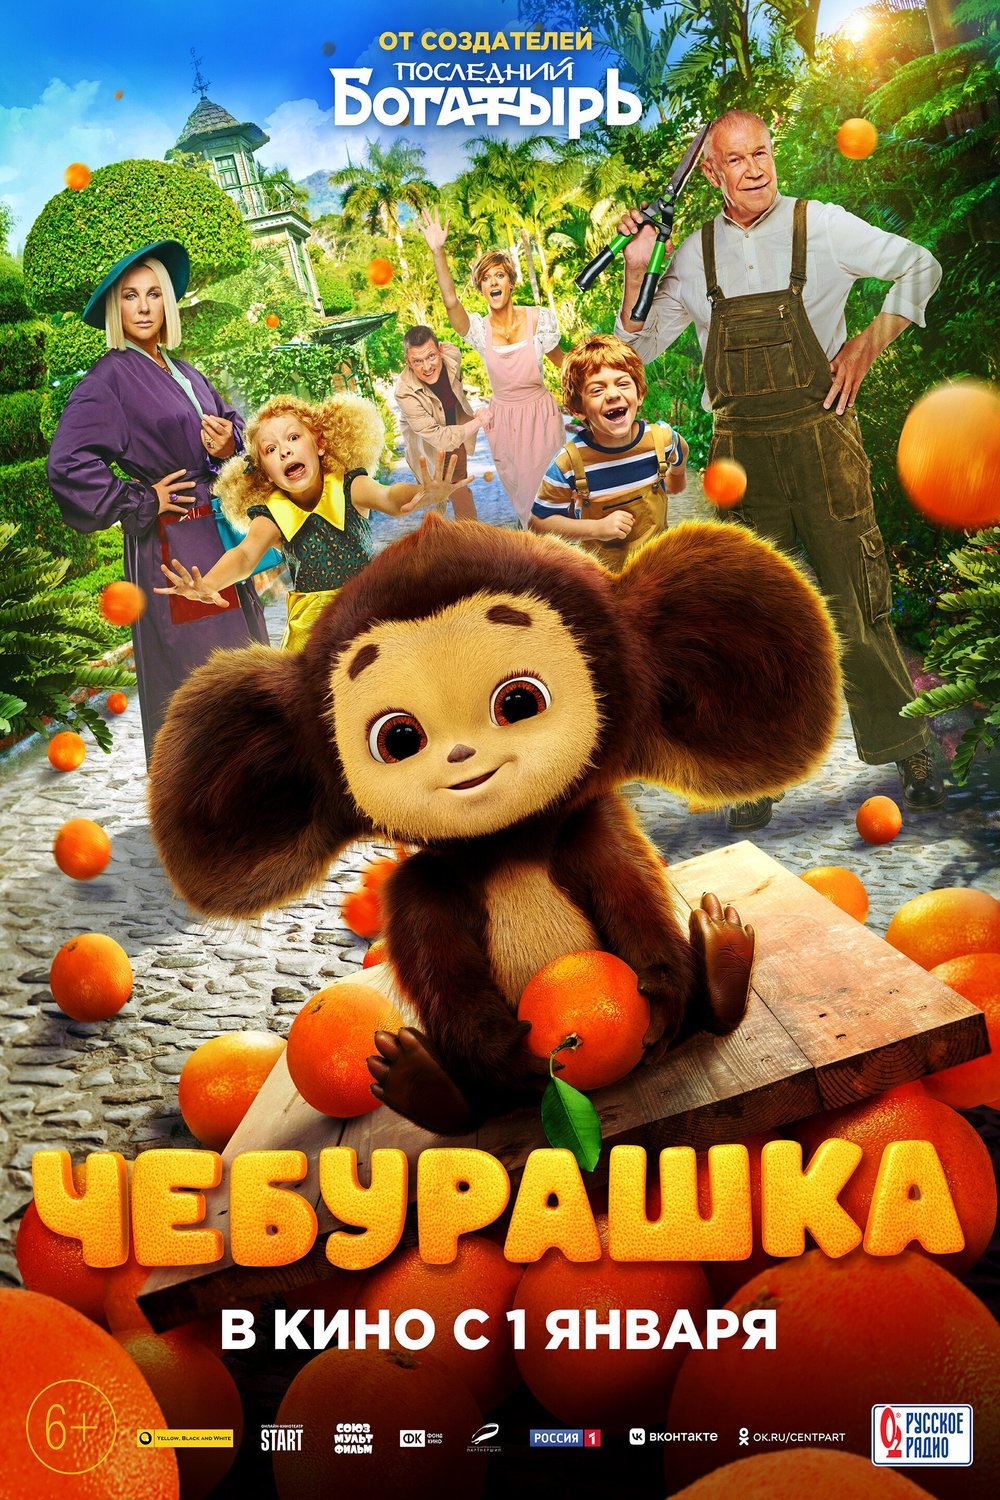 L'affiche originale du film Cheburashka en russe